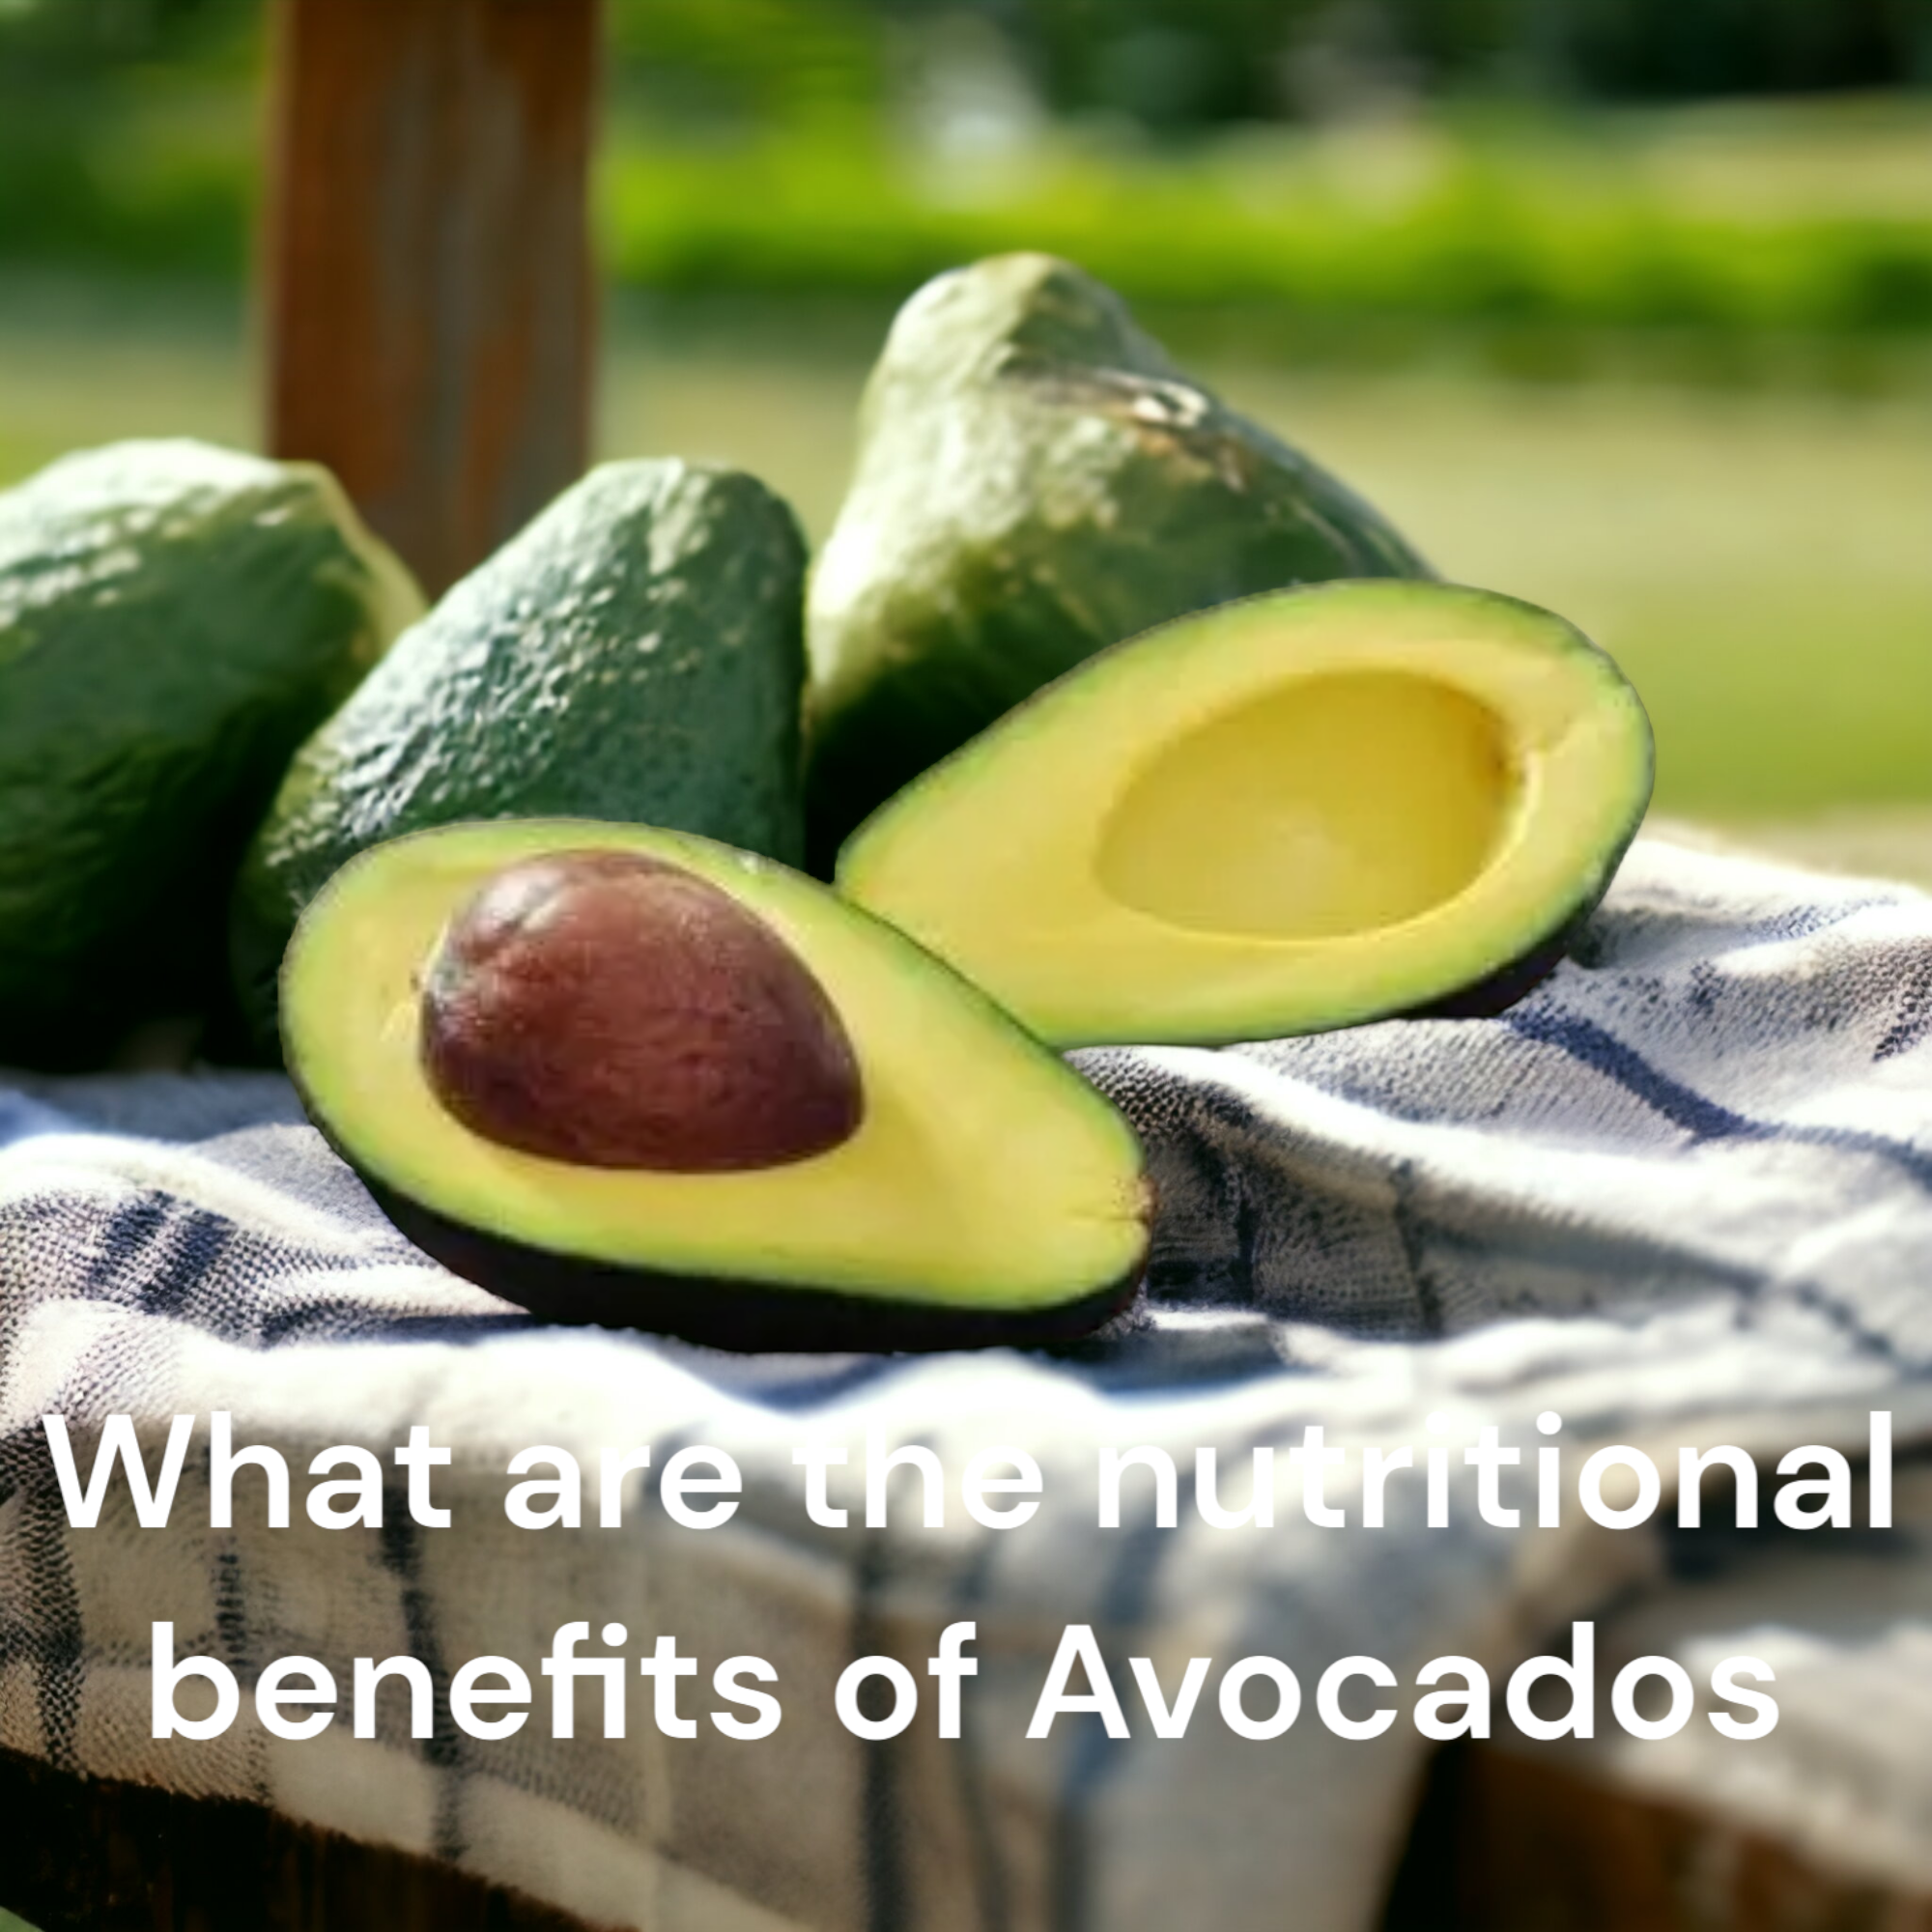 5 health benefits of Avocados